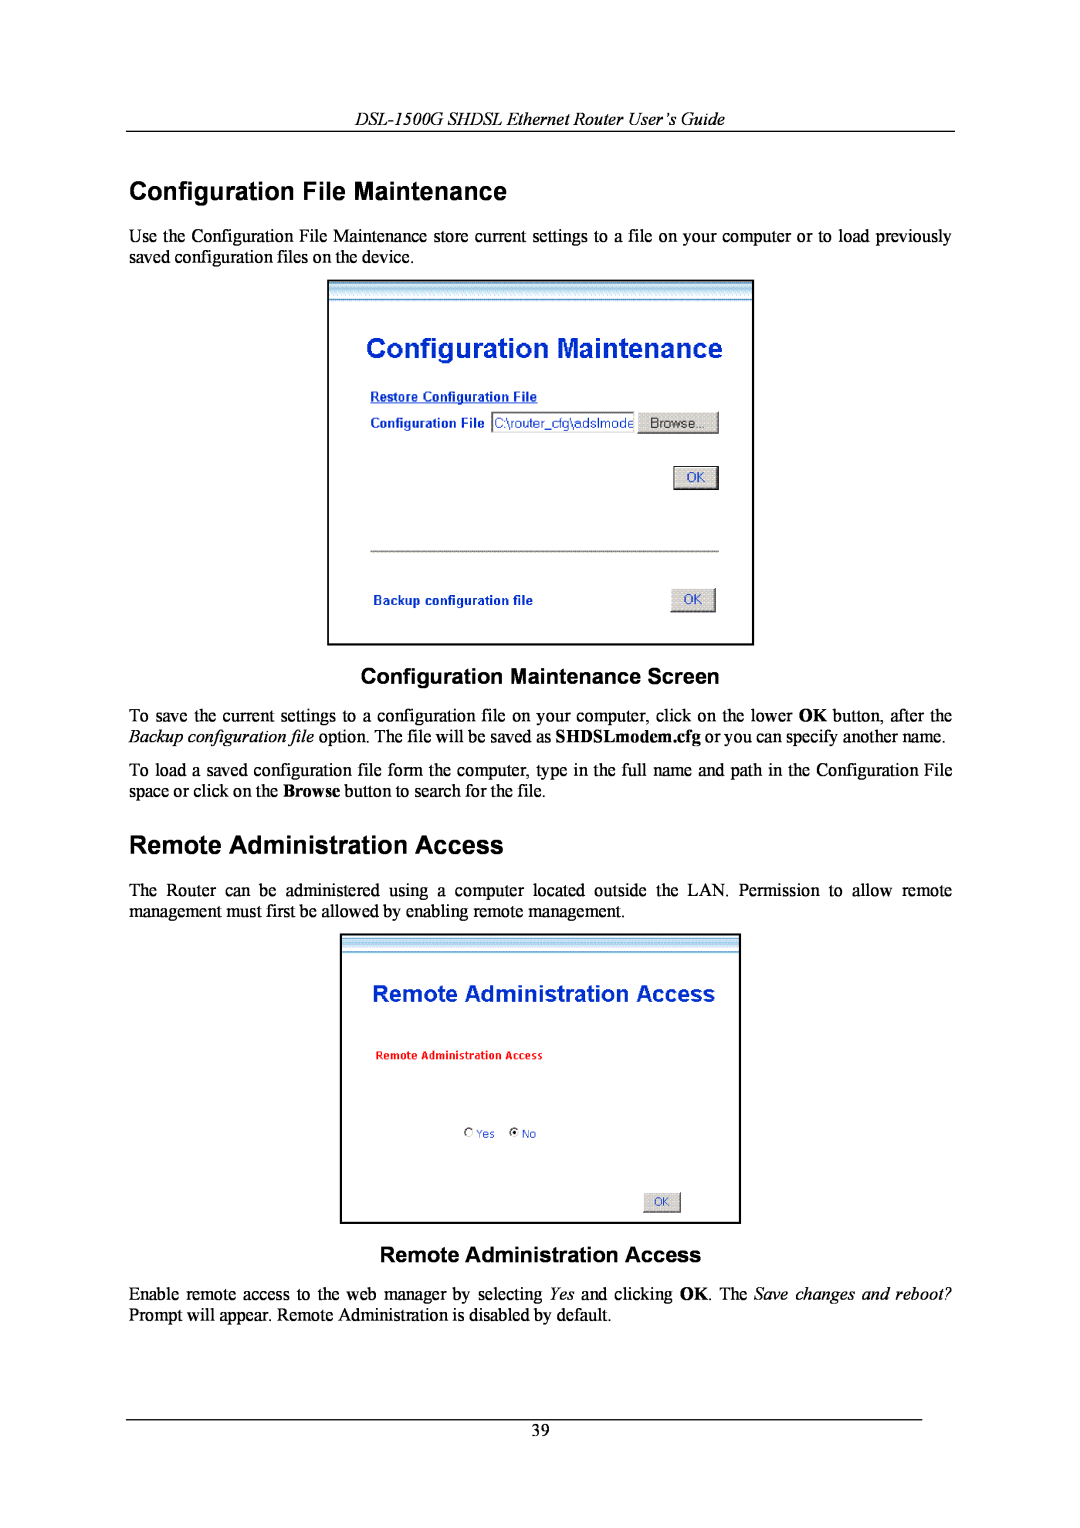 D-Link DSL-1500G manual Configuration File Maintenance, Remote Administration Access, Configuration Maintenance Screen 